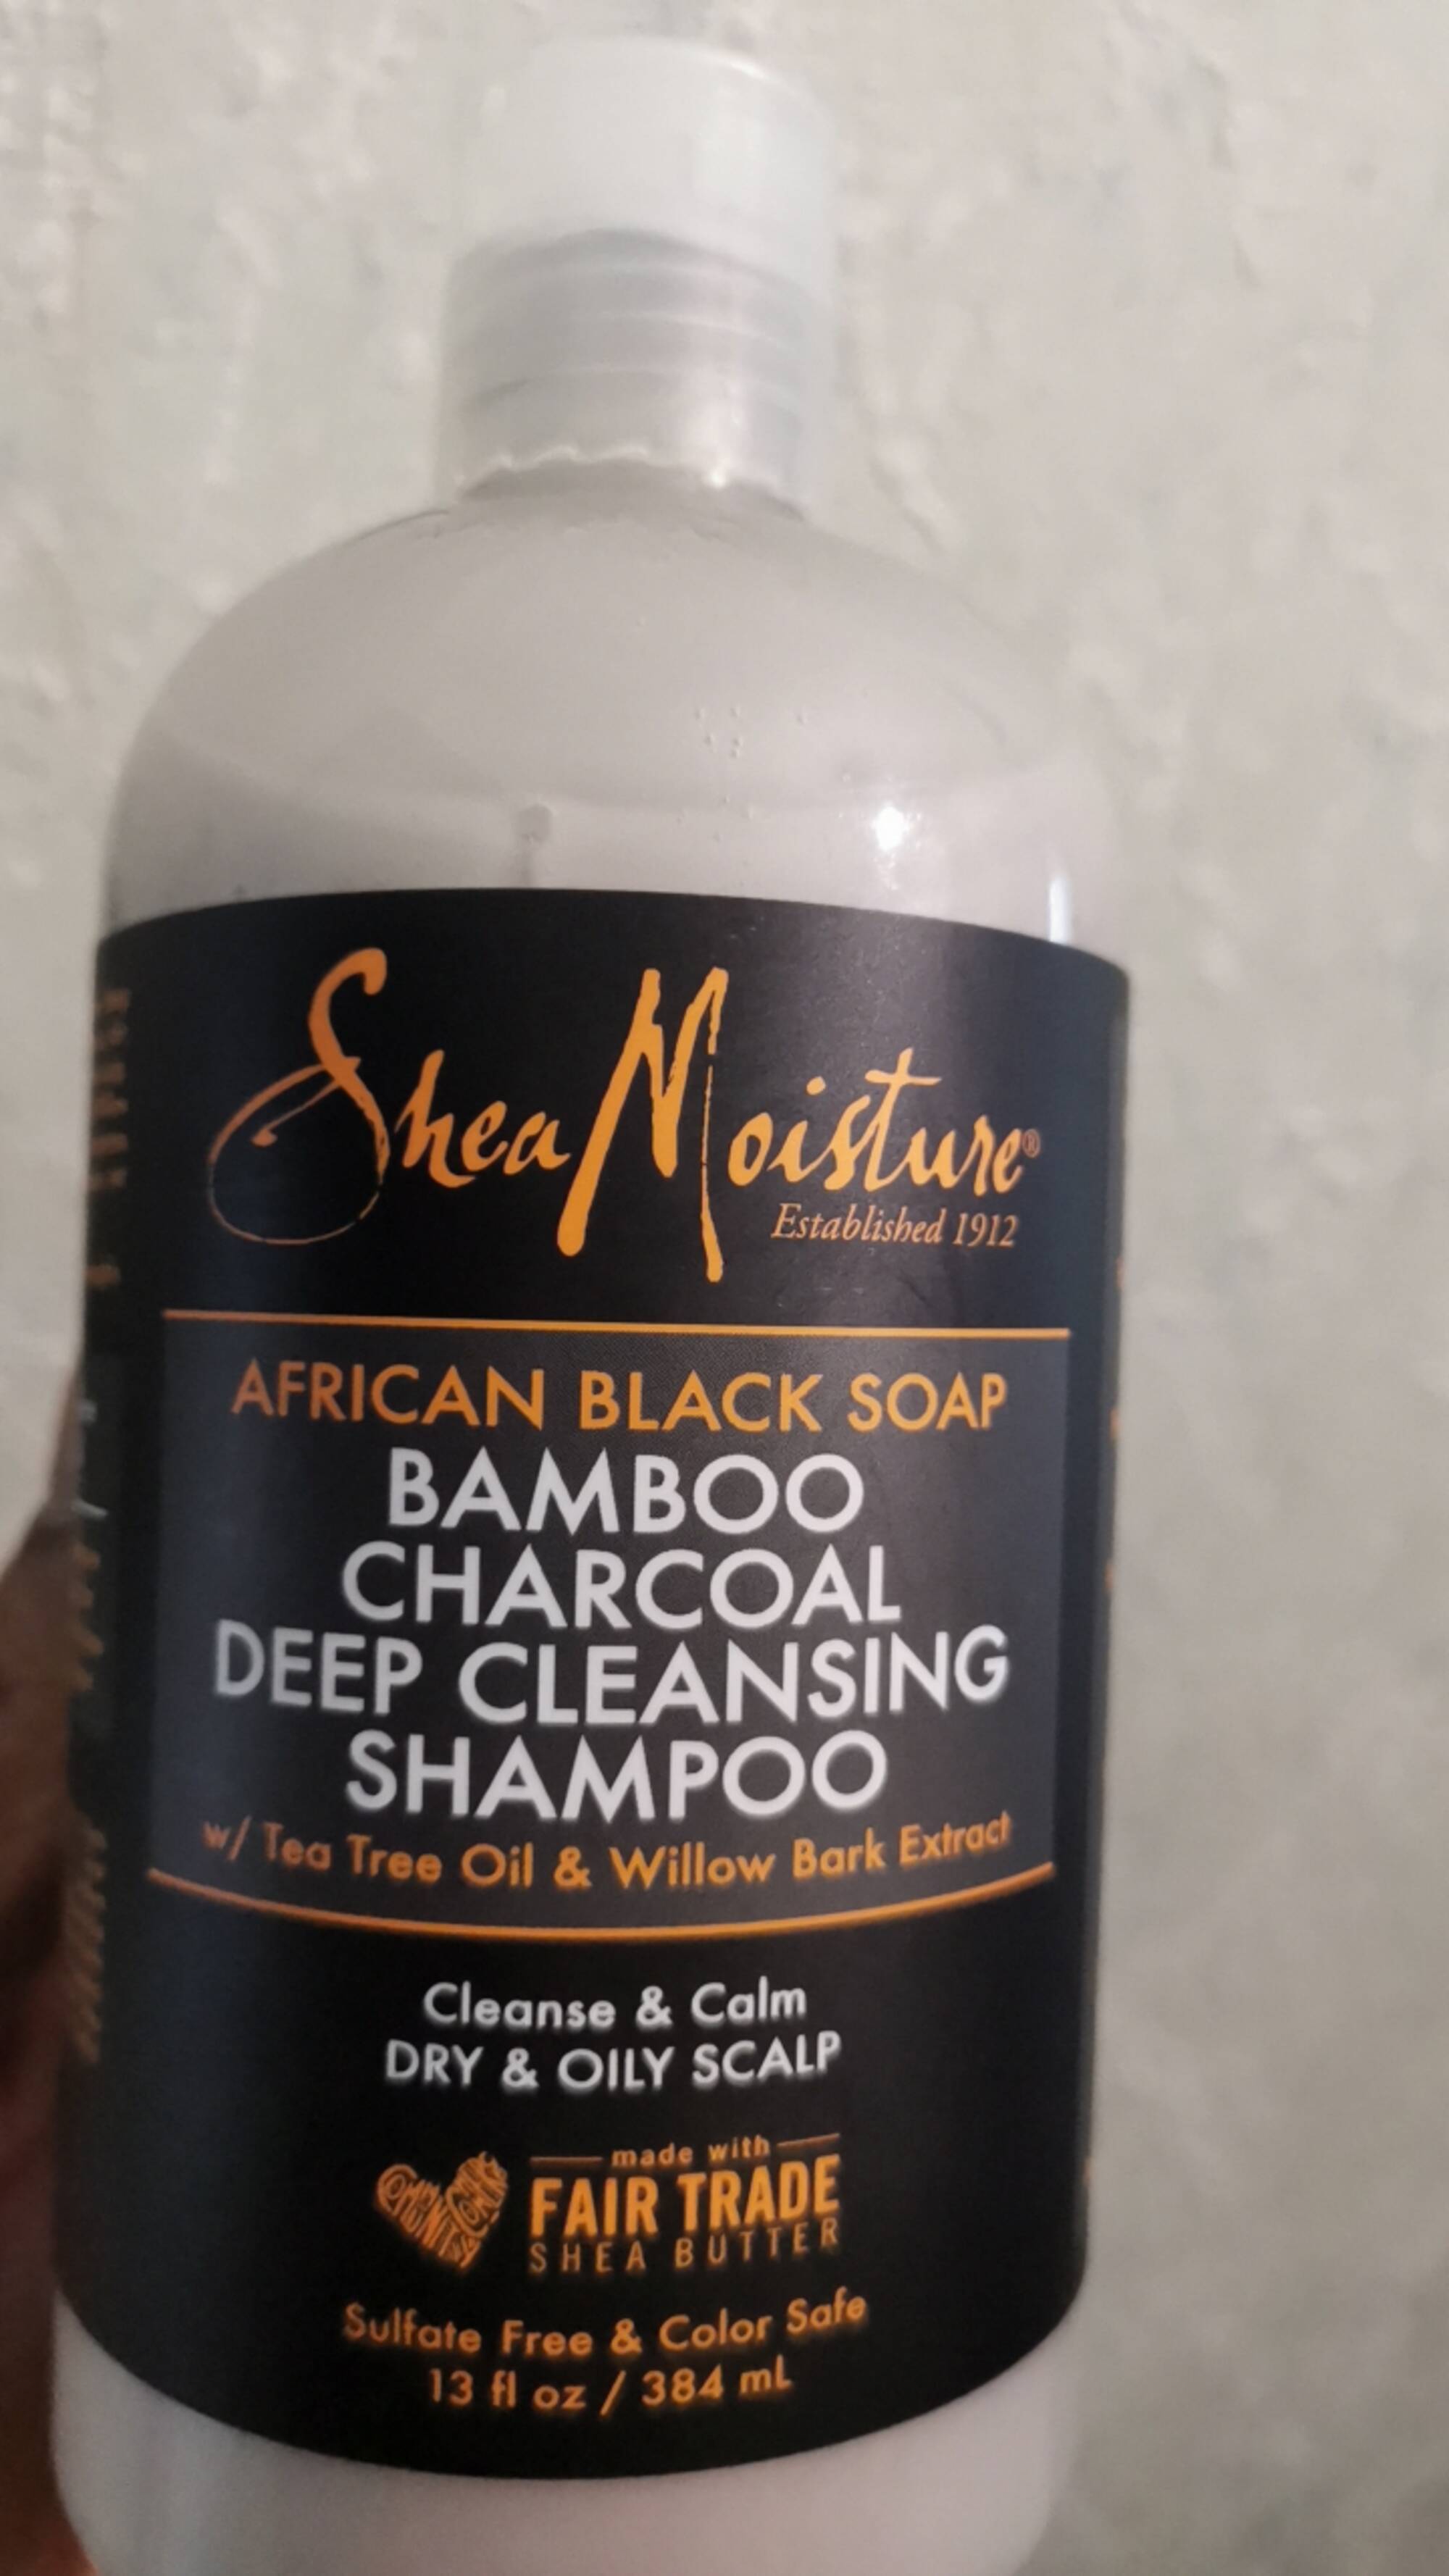 SHEA MOISTURE - Bamboo charcoal deep cleansing shampoo